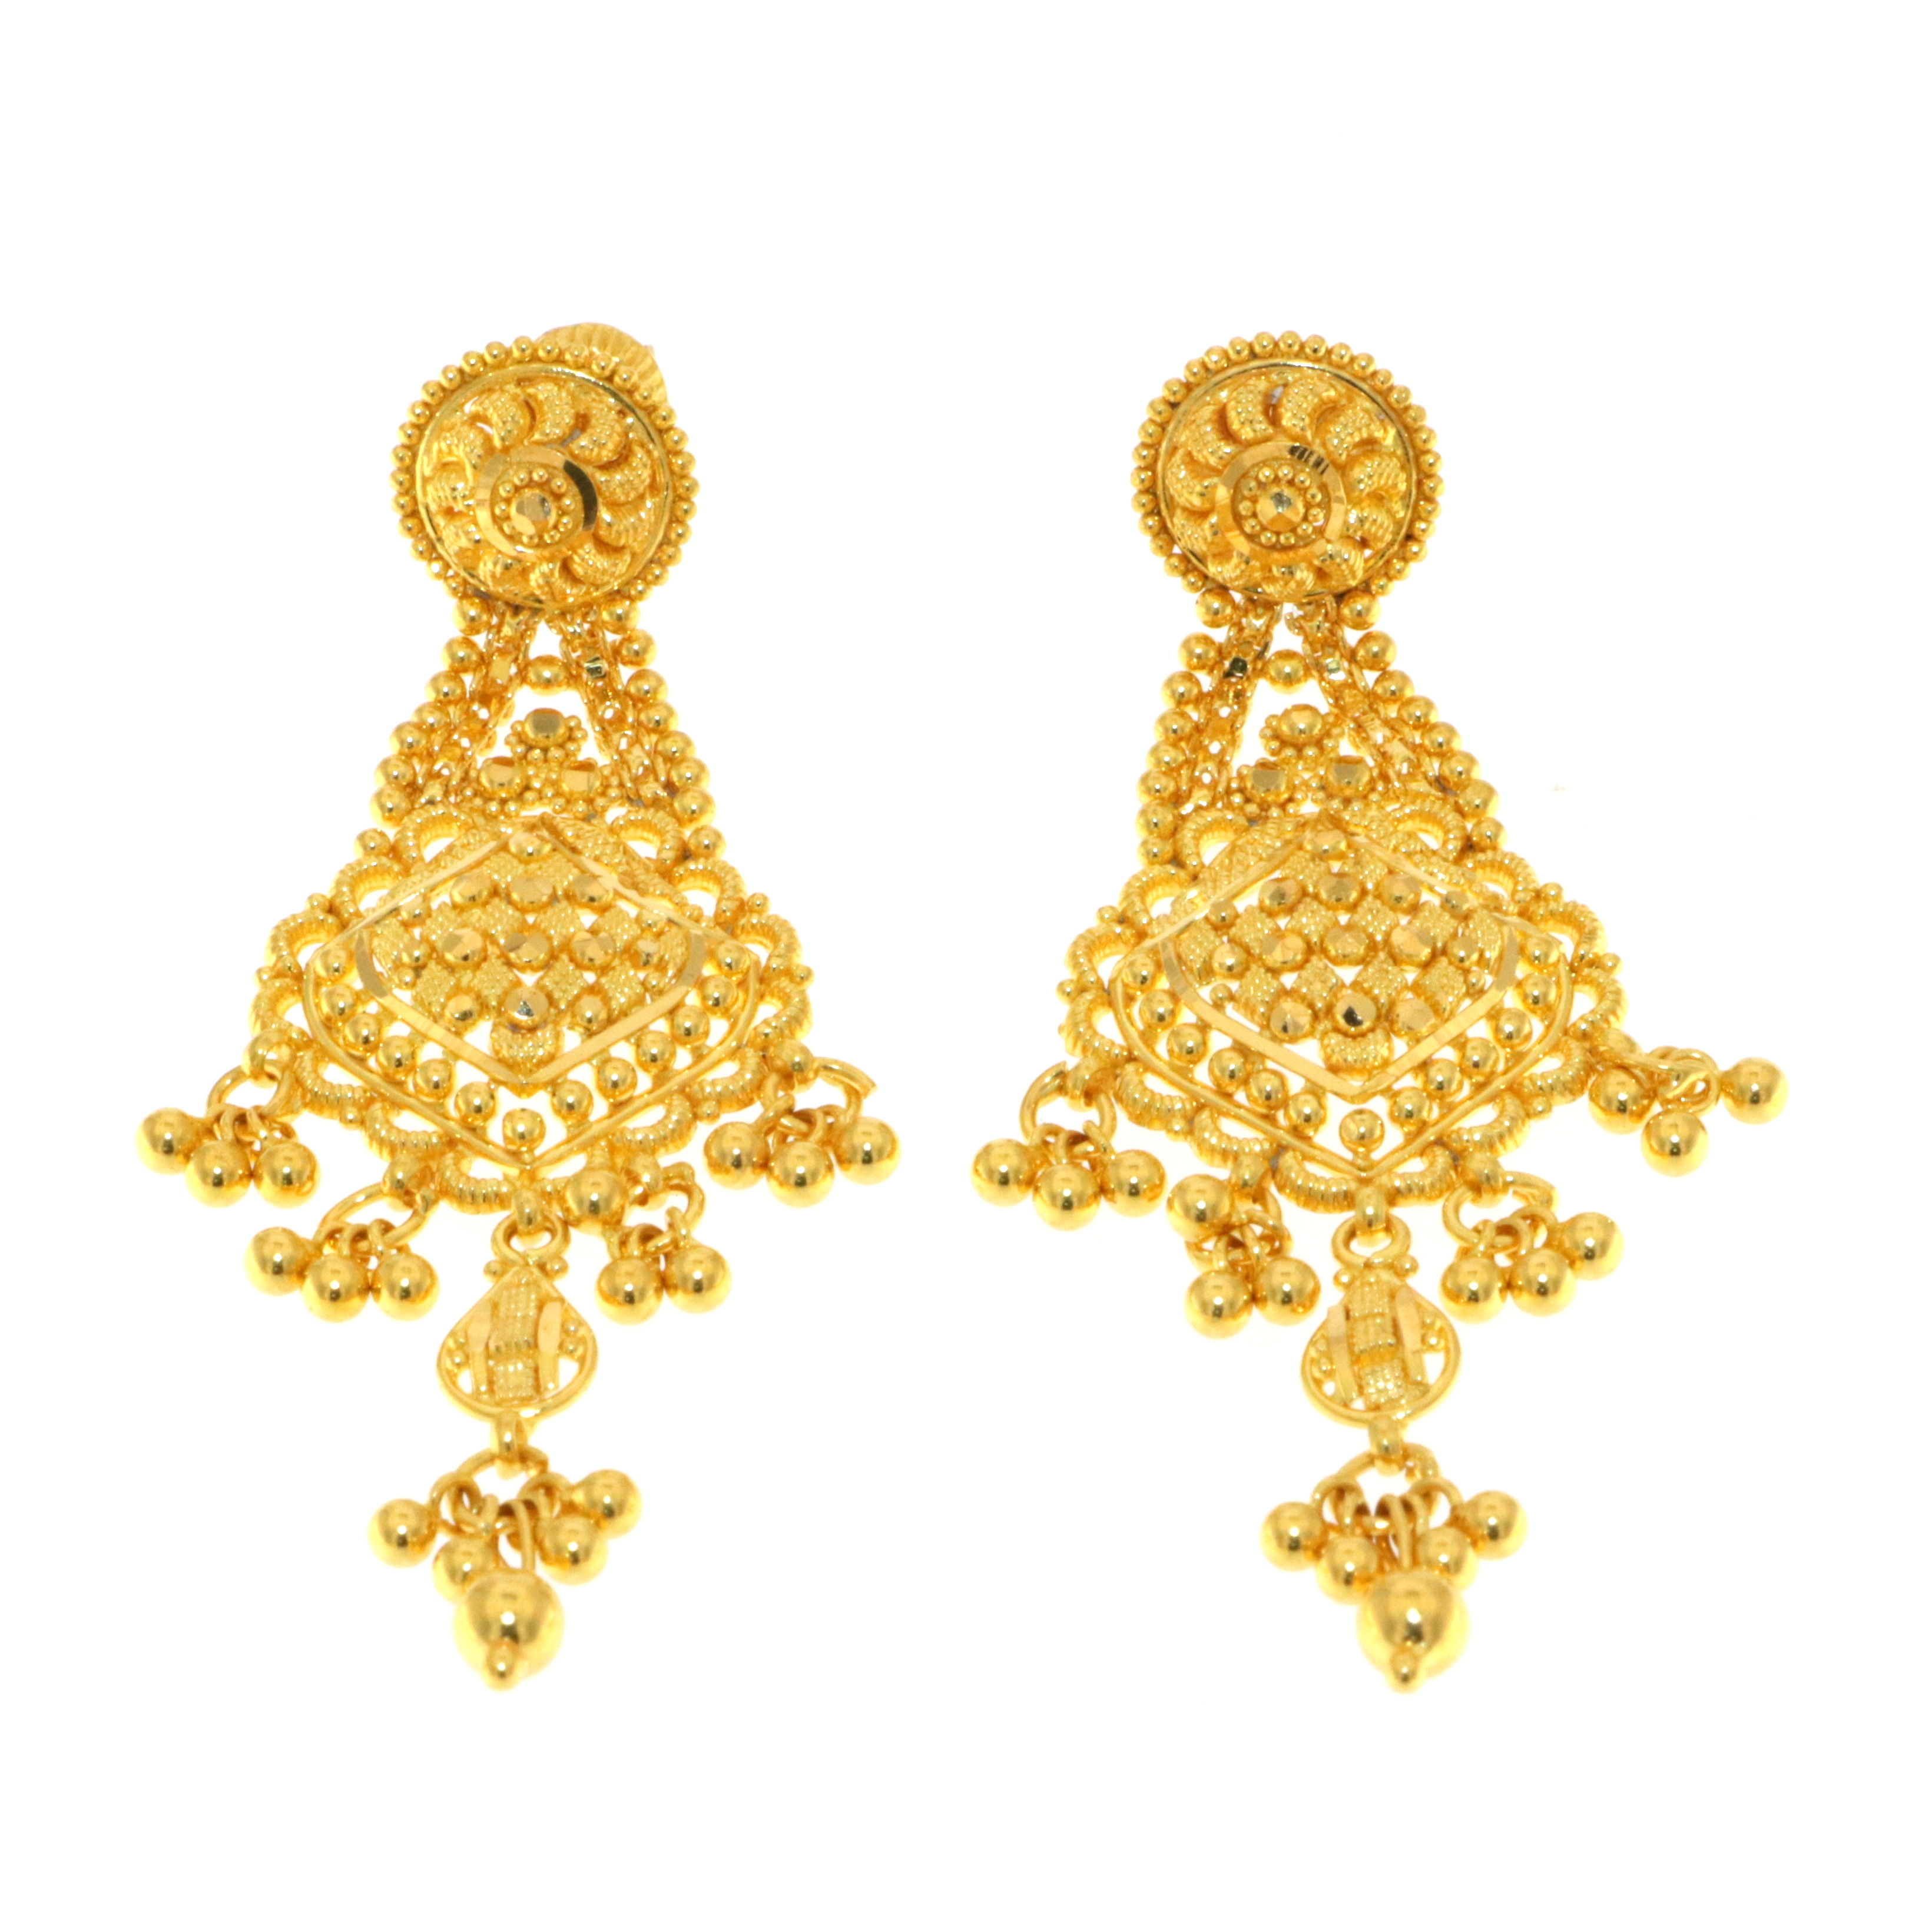 22ct Gold Filigree Earrings